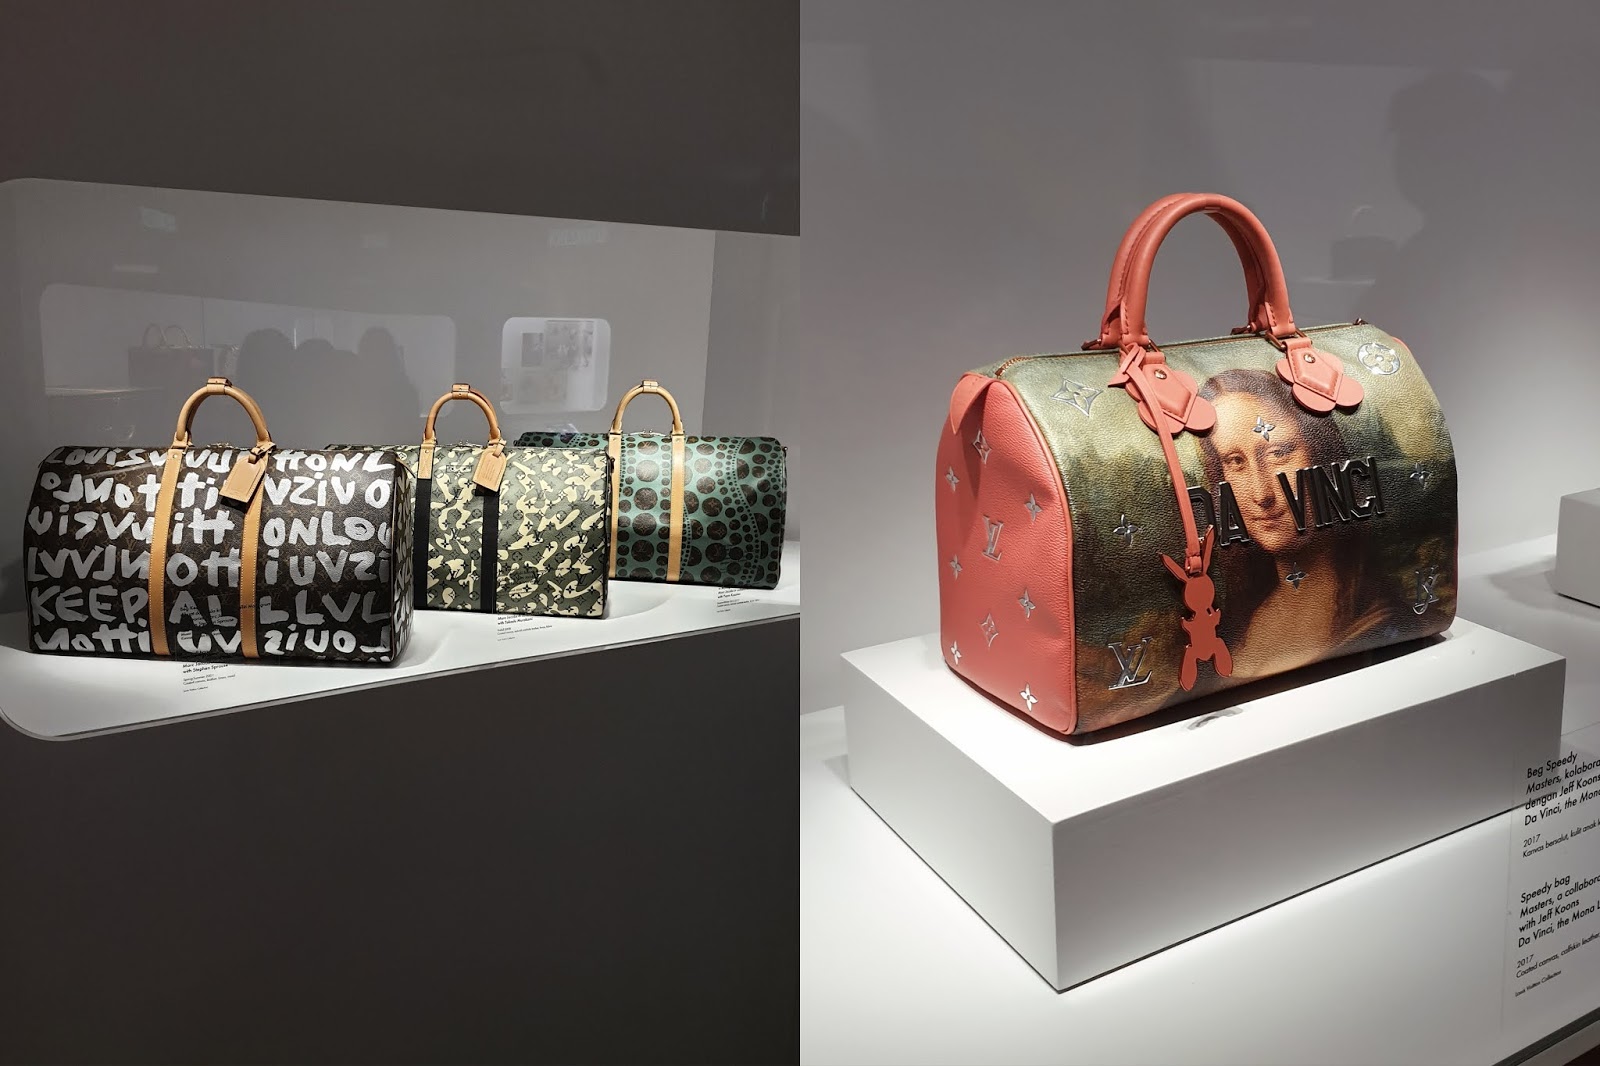 Louis Vuitton Time Capsule exhibition lands in Kuala Lumpur